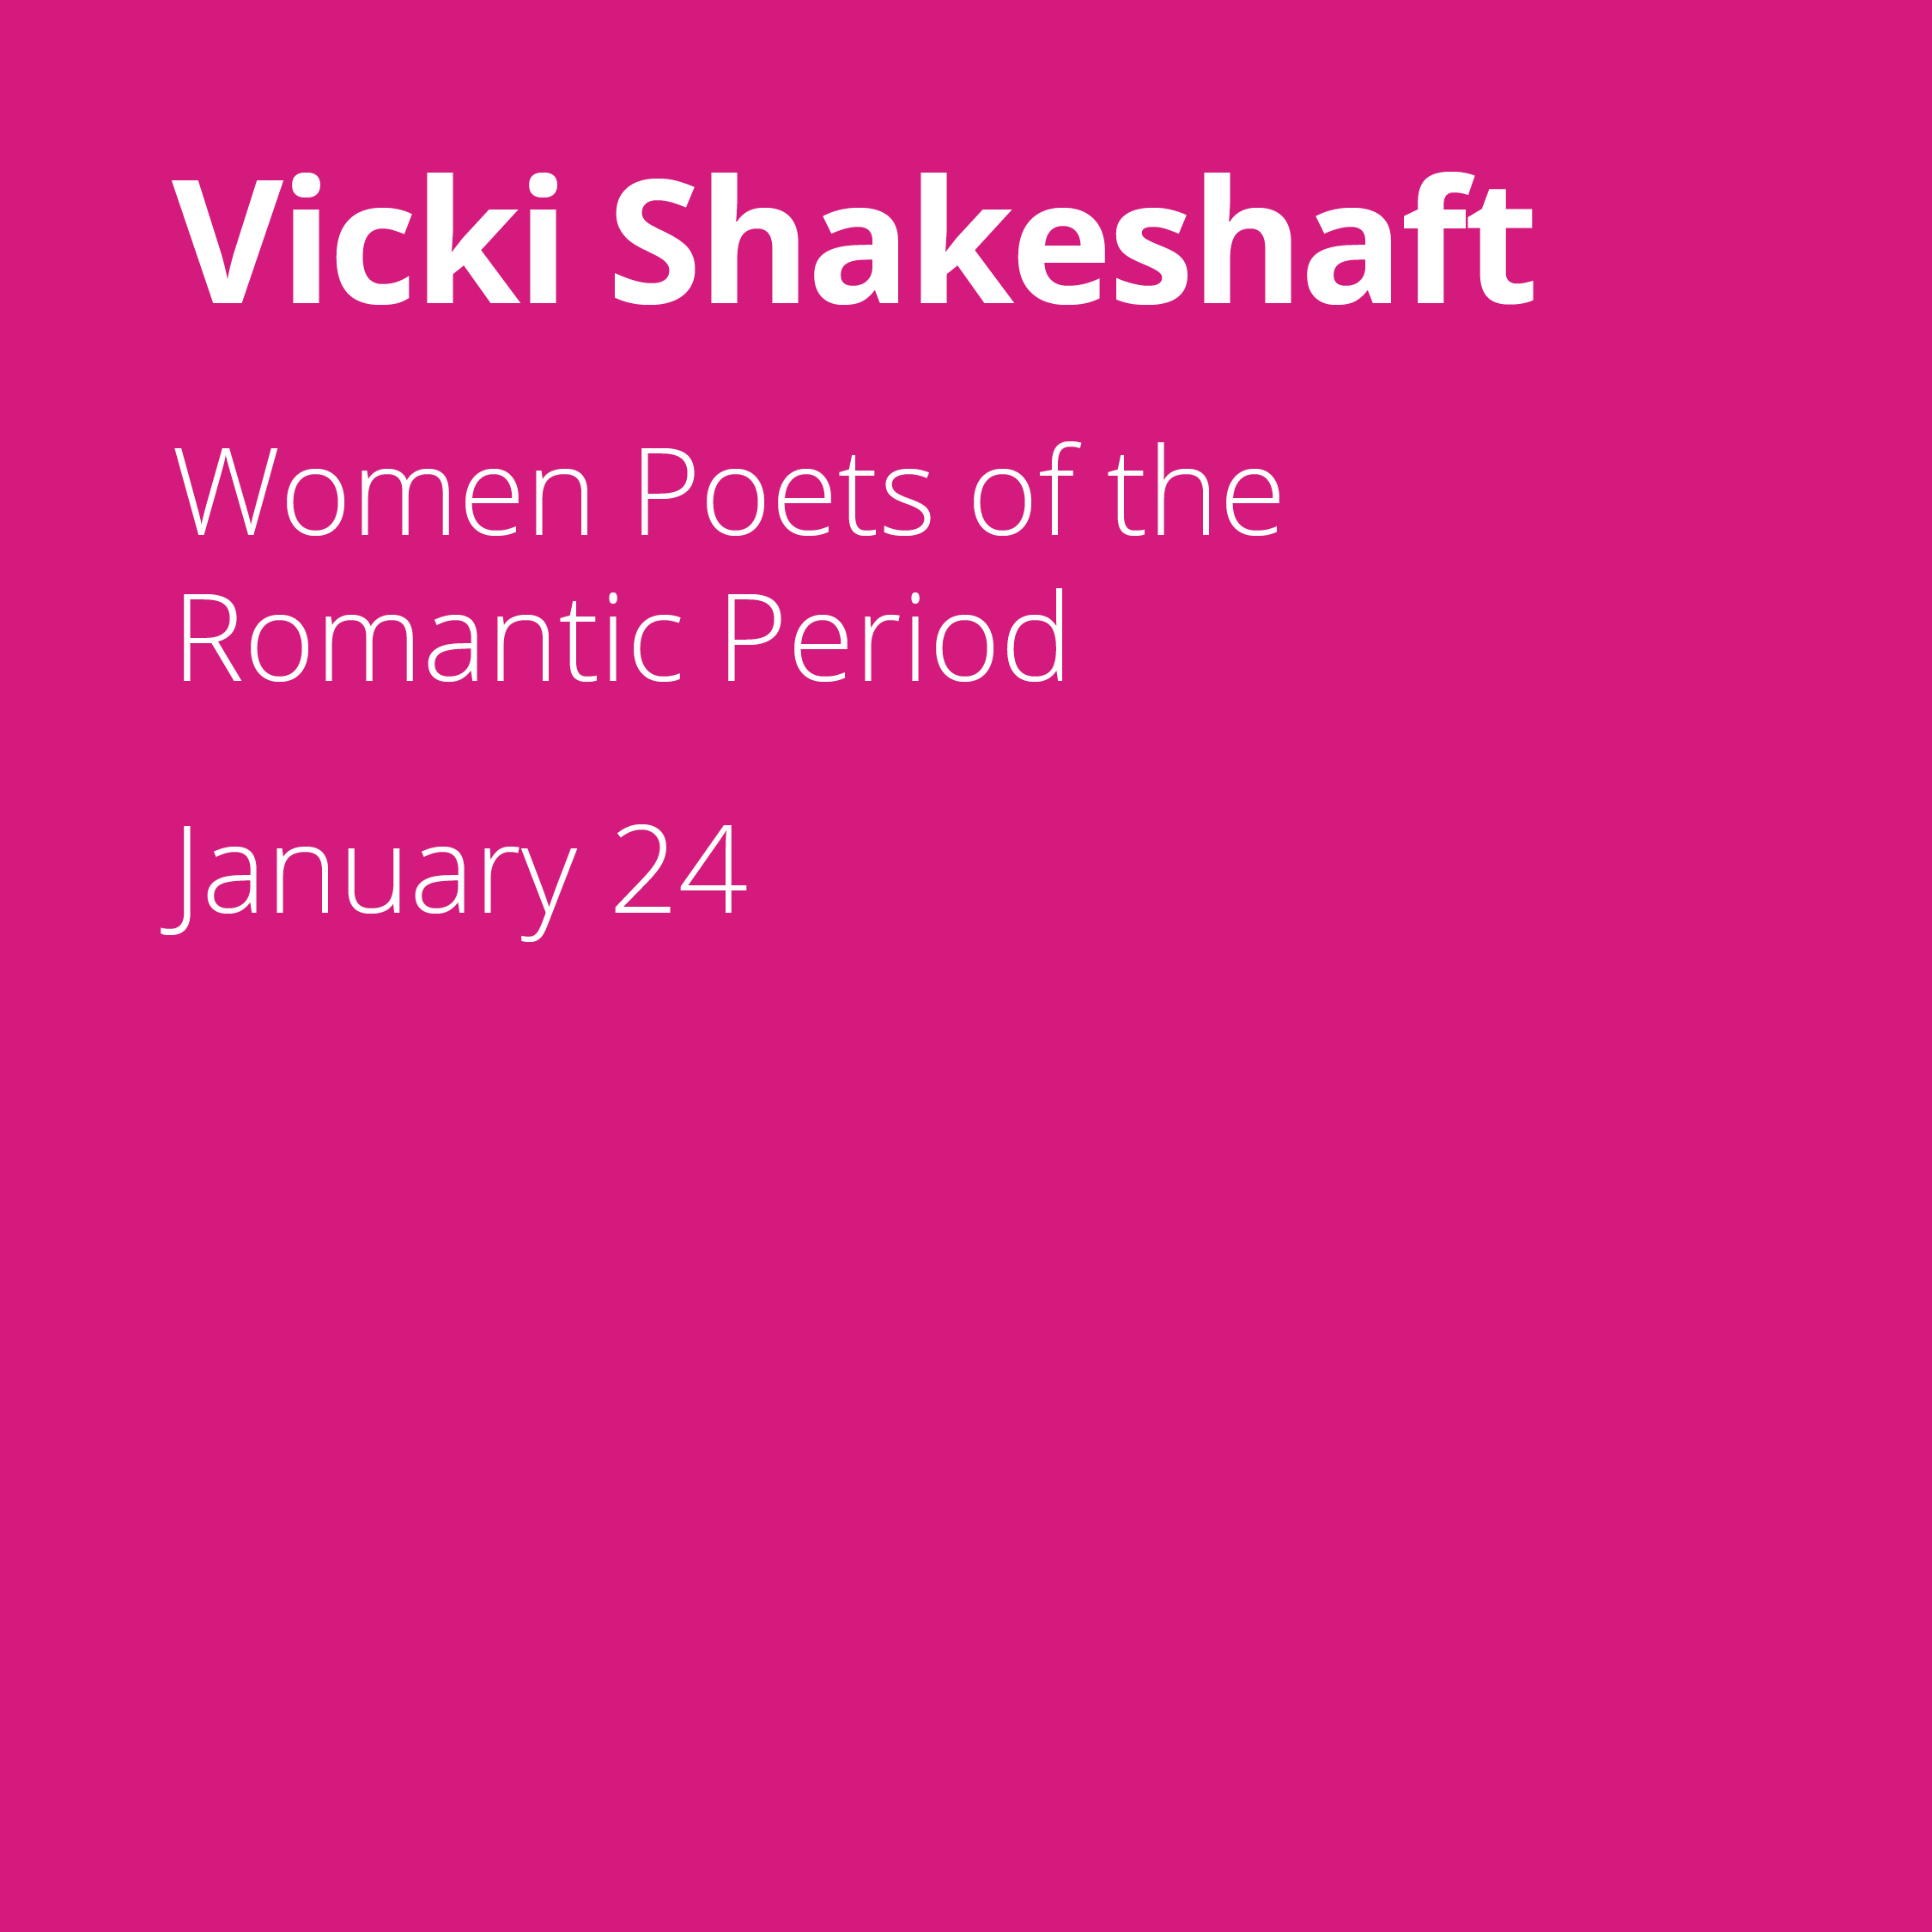 Vicki Shakeshaft